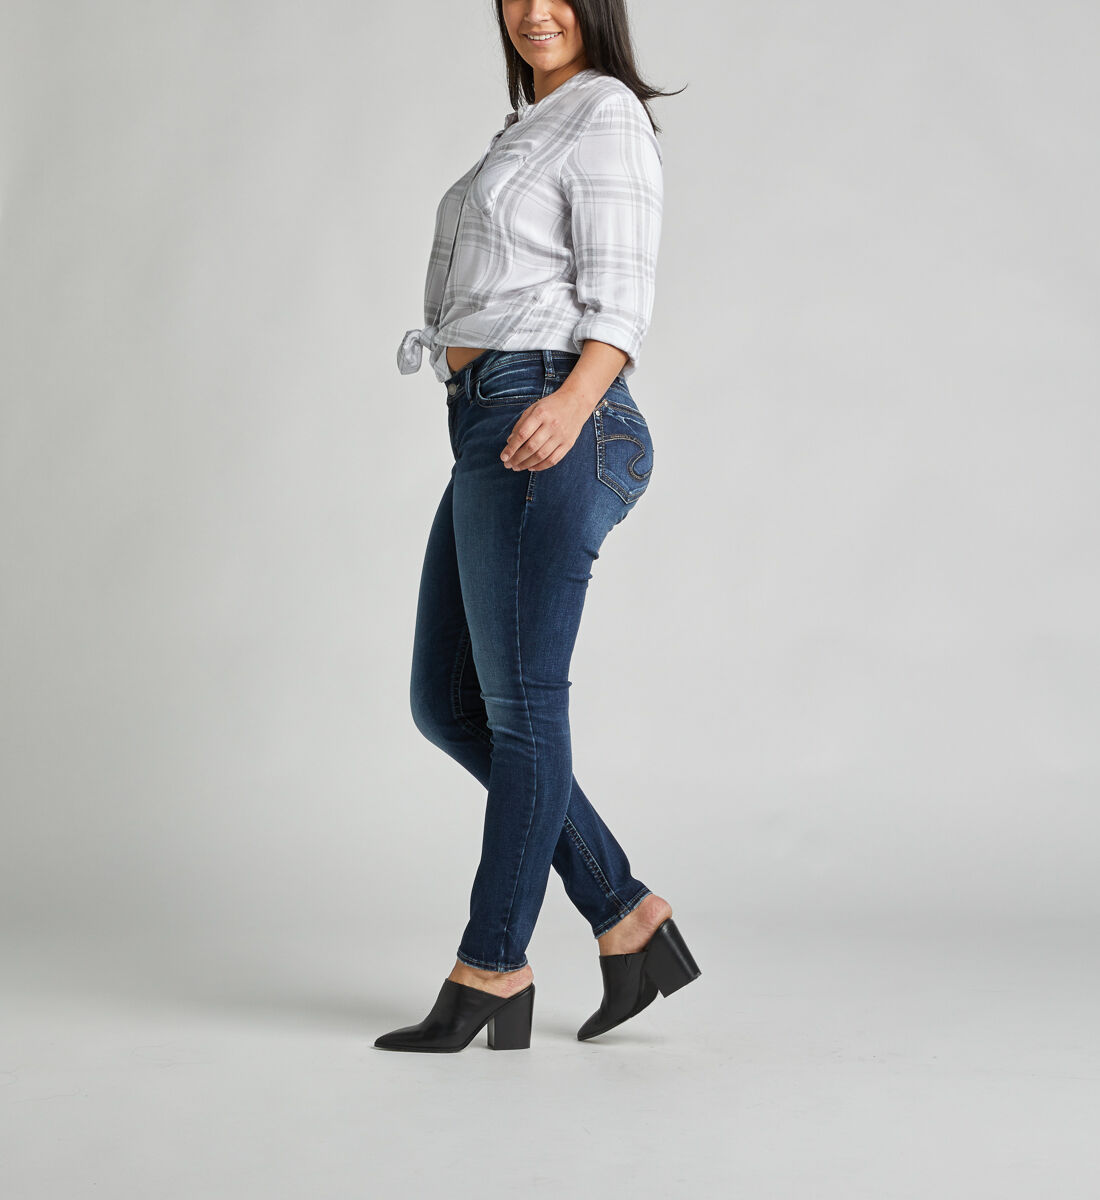 Silver Suki Mid Rise Women's Dark Wash Jeans Plus Size 18/32 W9516SJB376